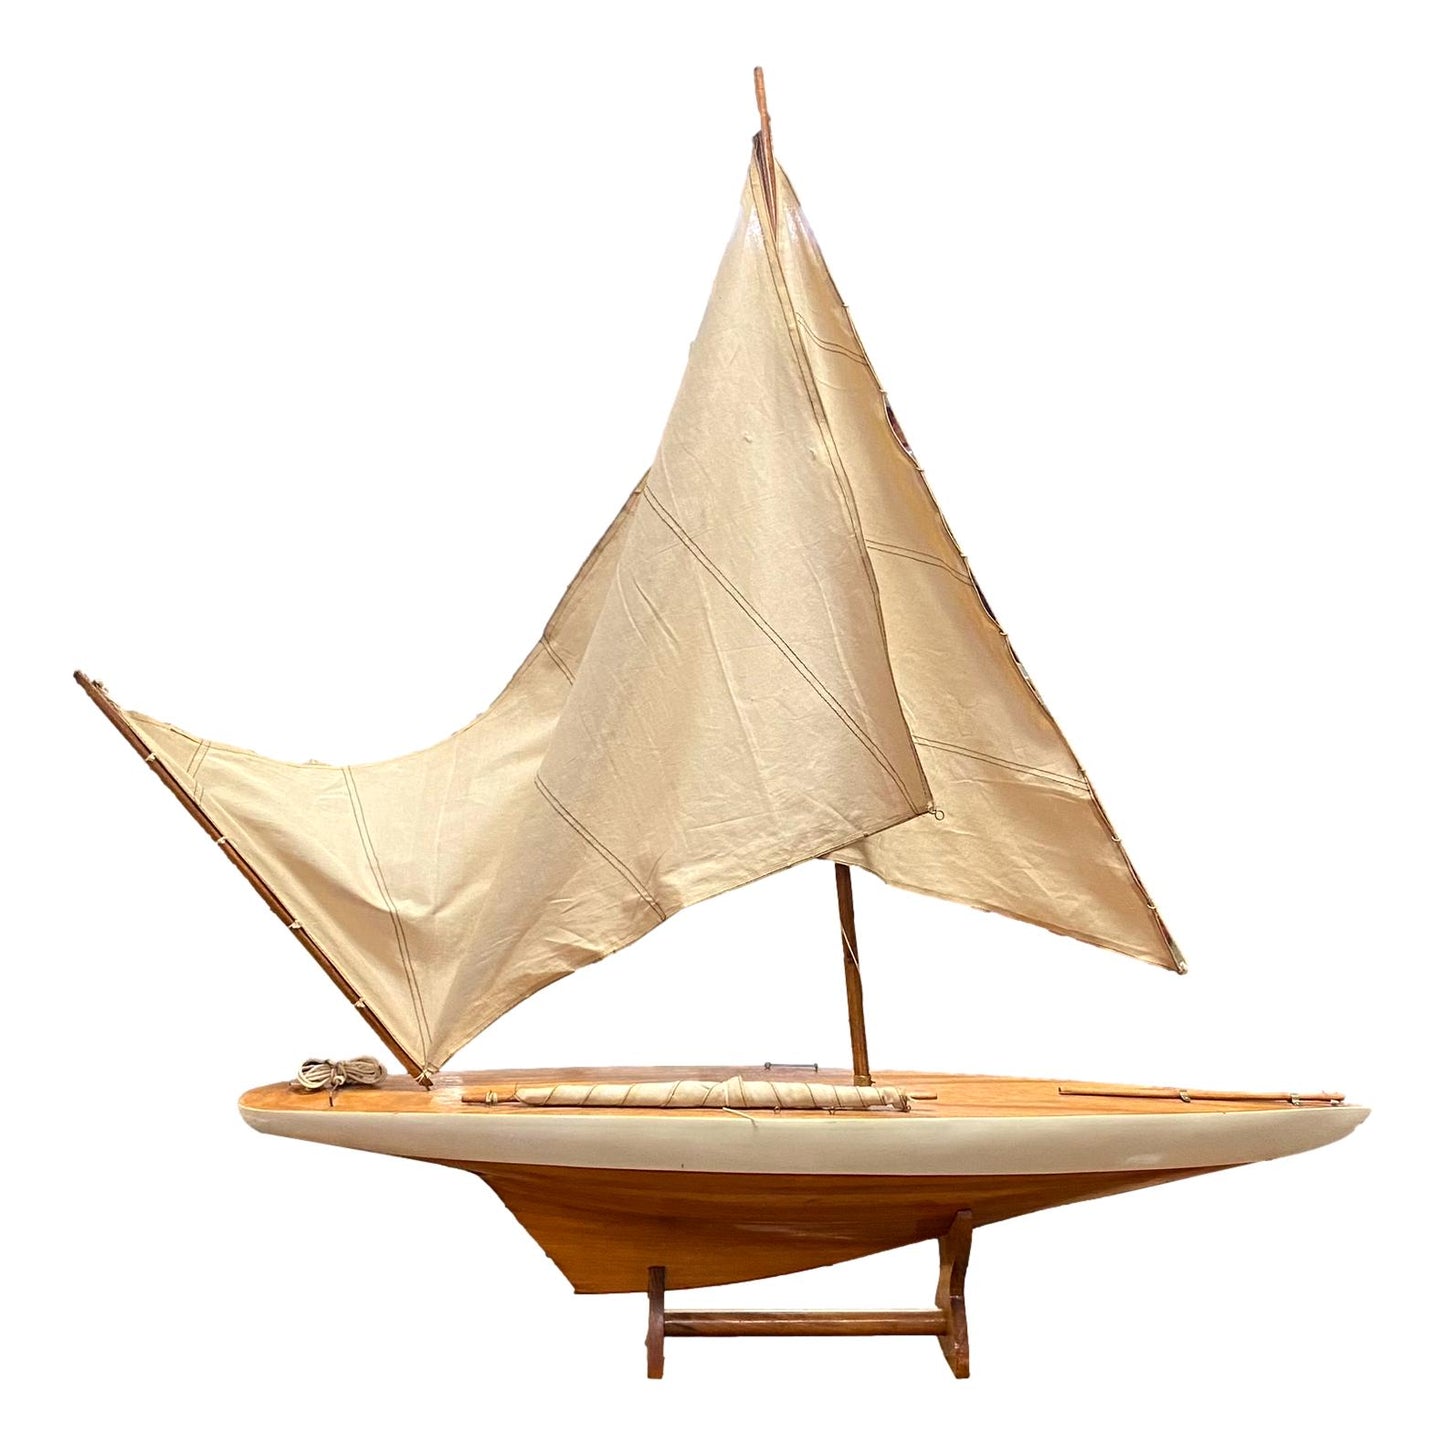 Model Sailboat